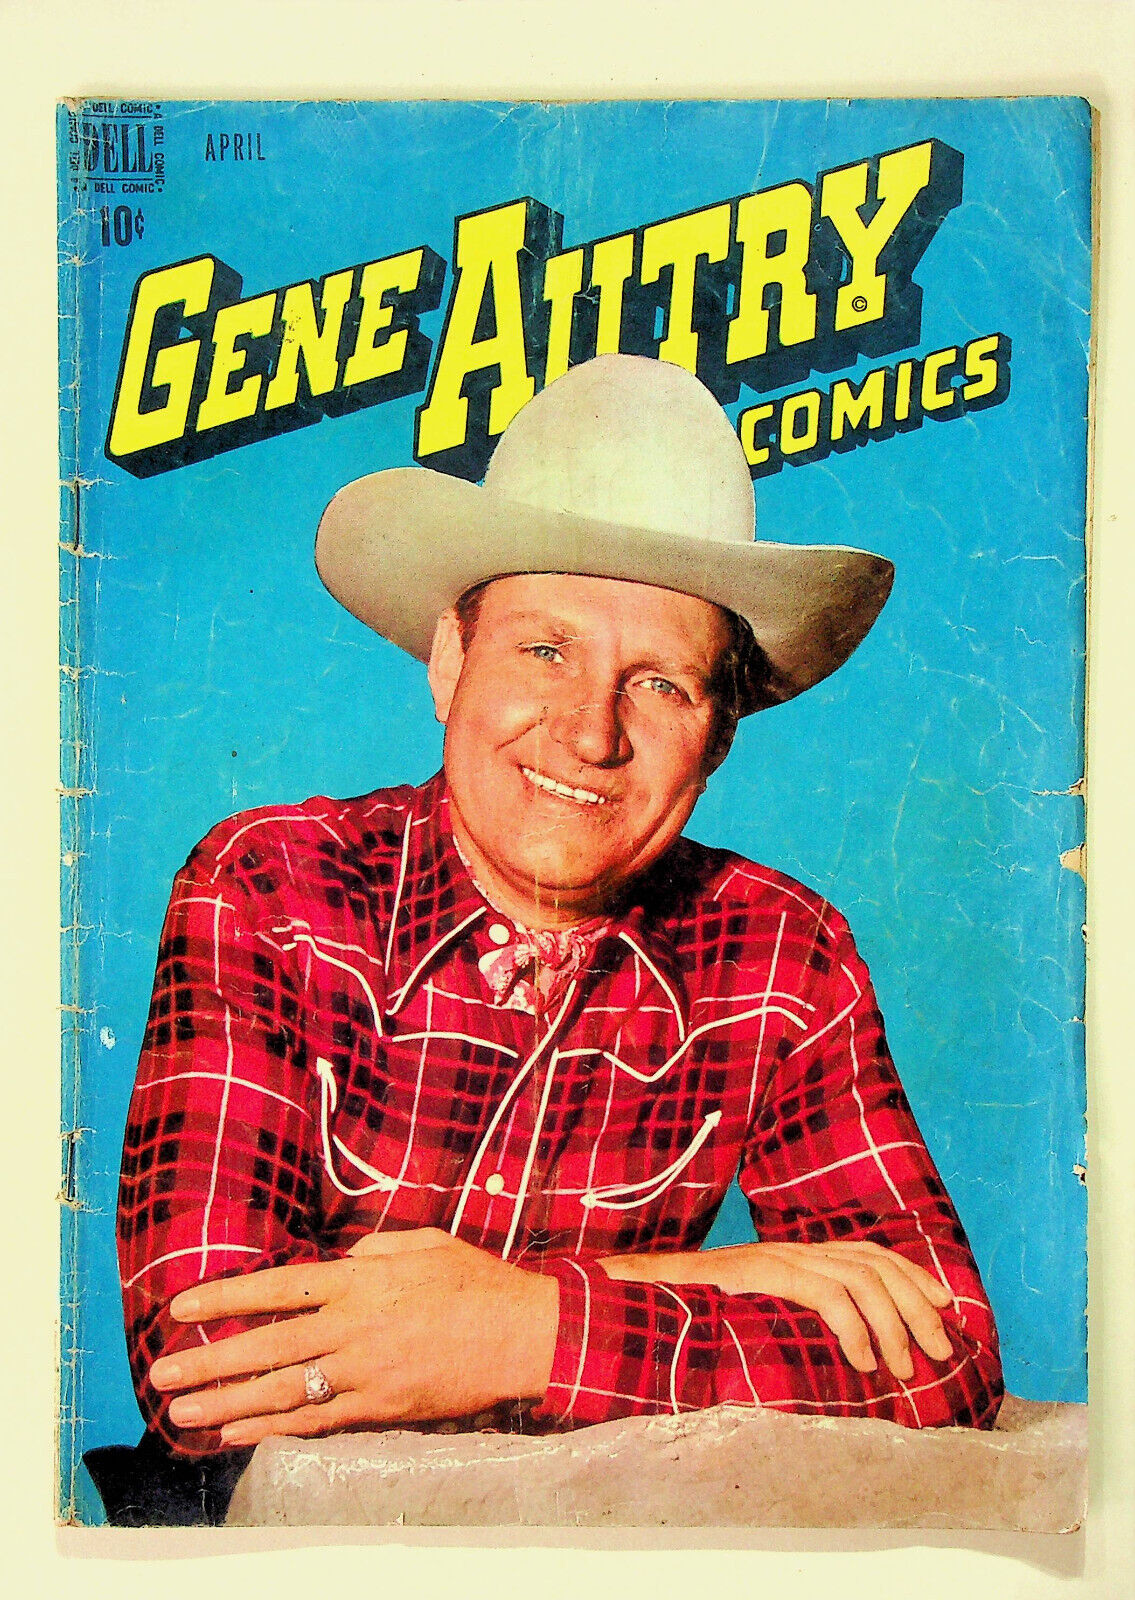 Gene Autry Comics #26 (Apr 1949, Dell) - Fair